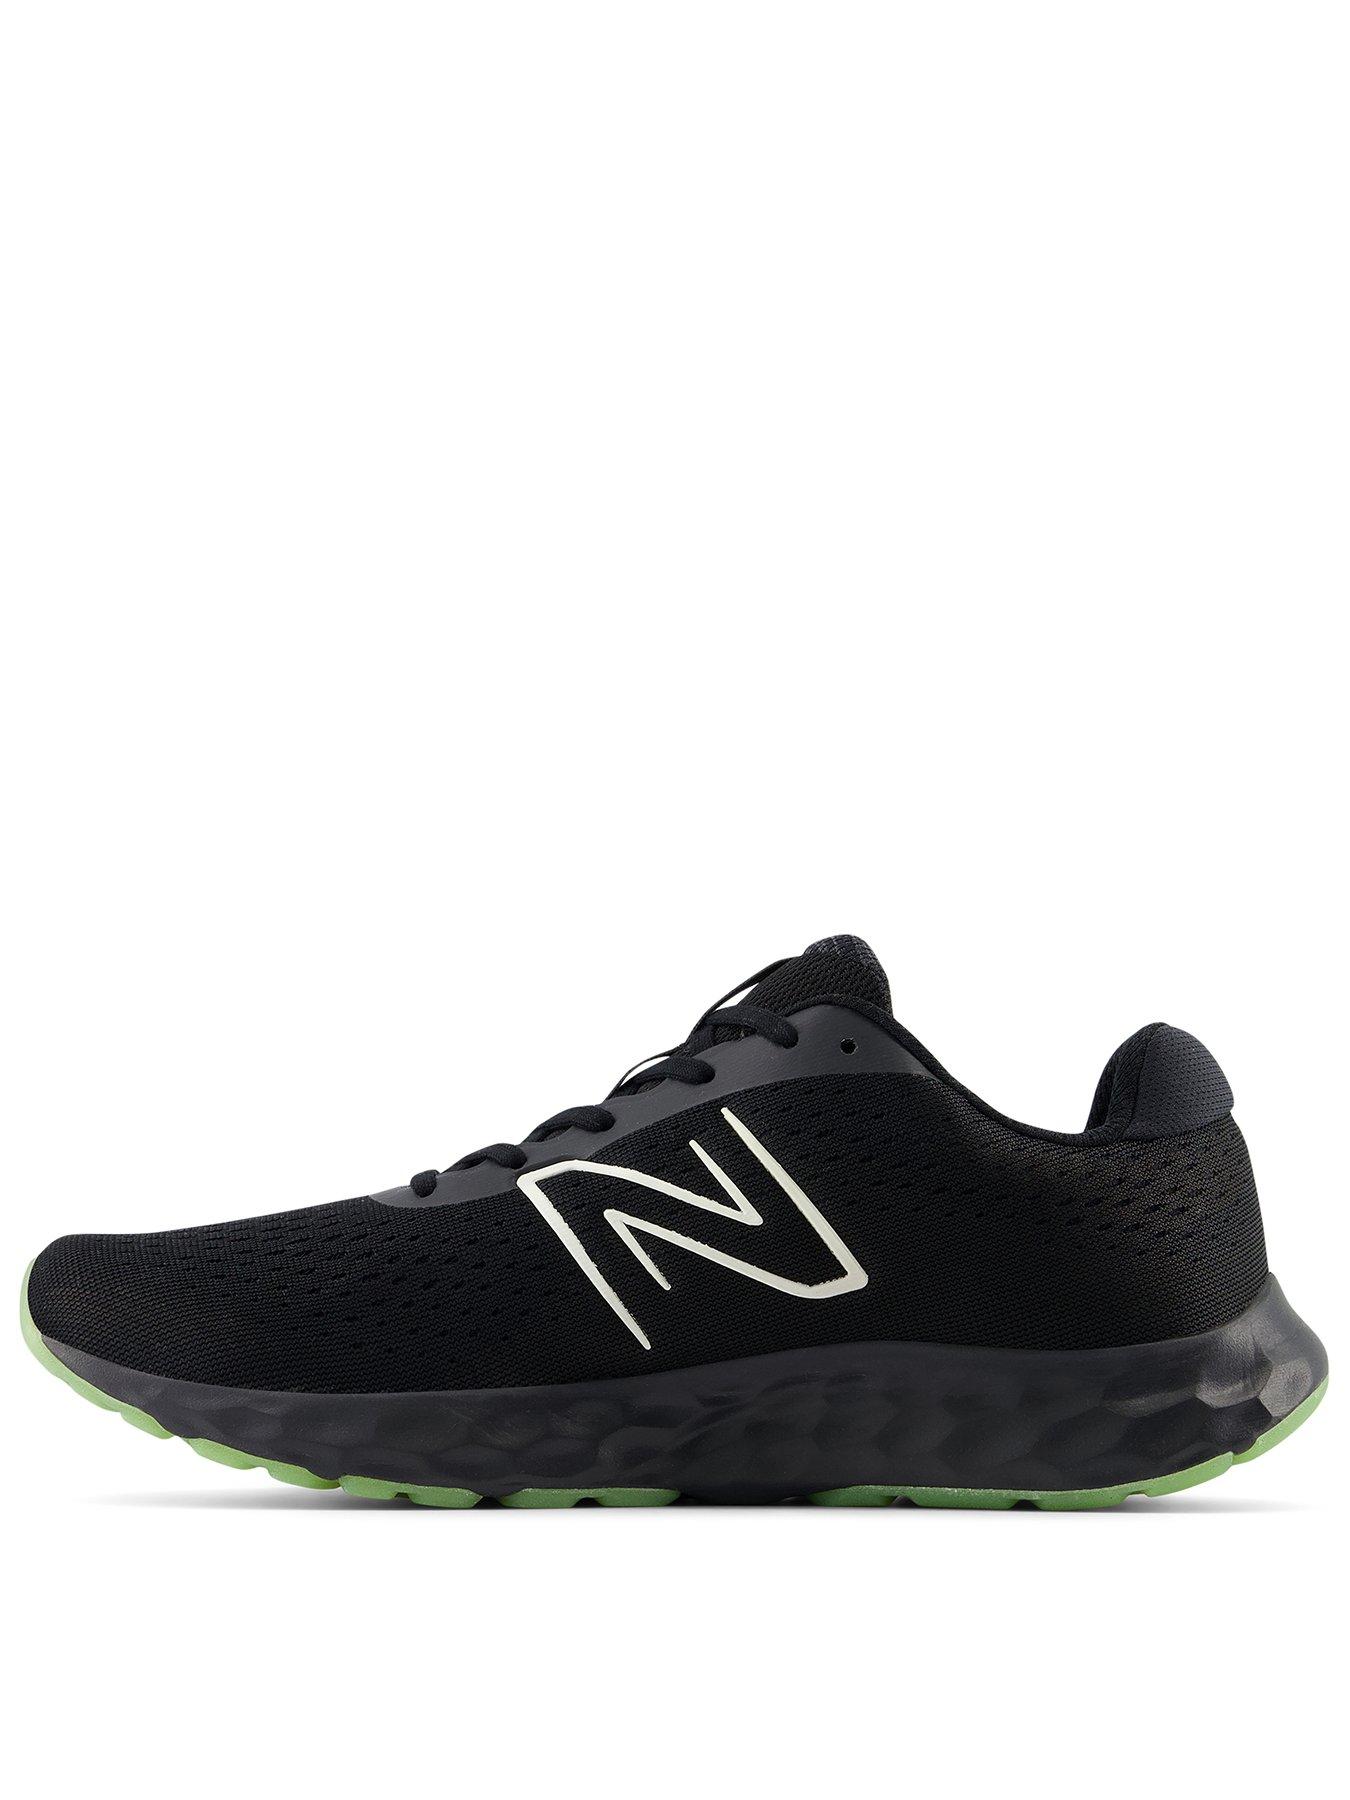 New Balance Mens Running 520v8 - Black, Black, Size 11.5, Men